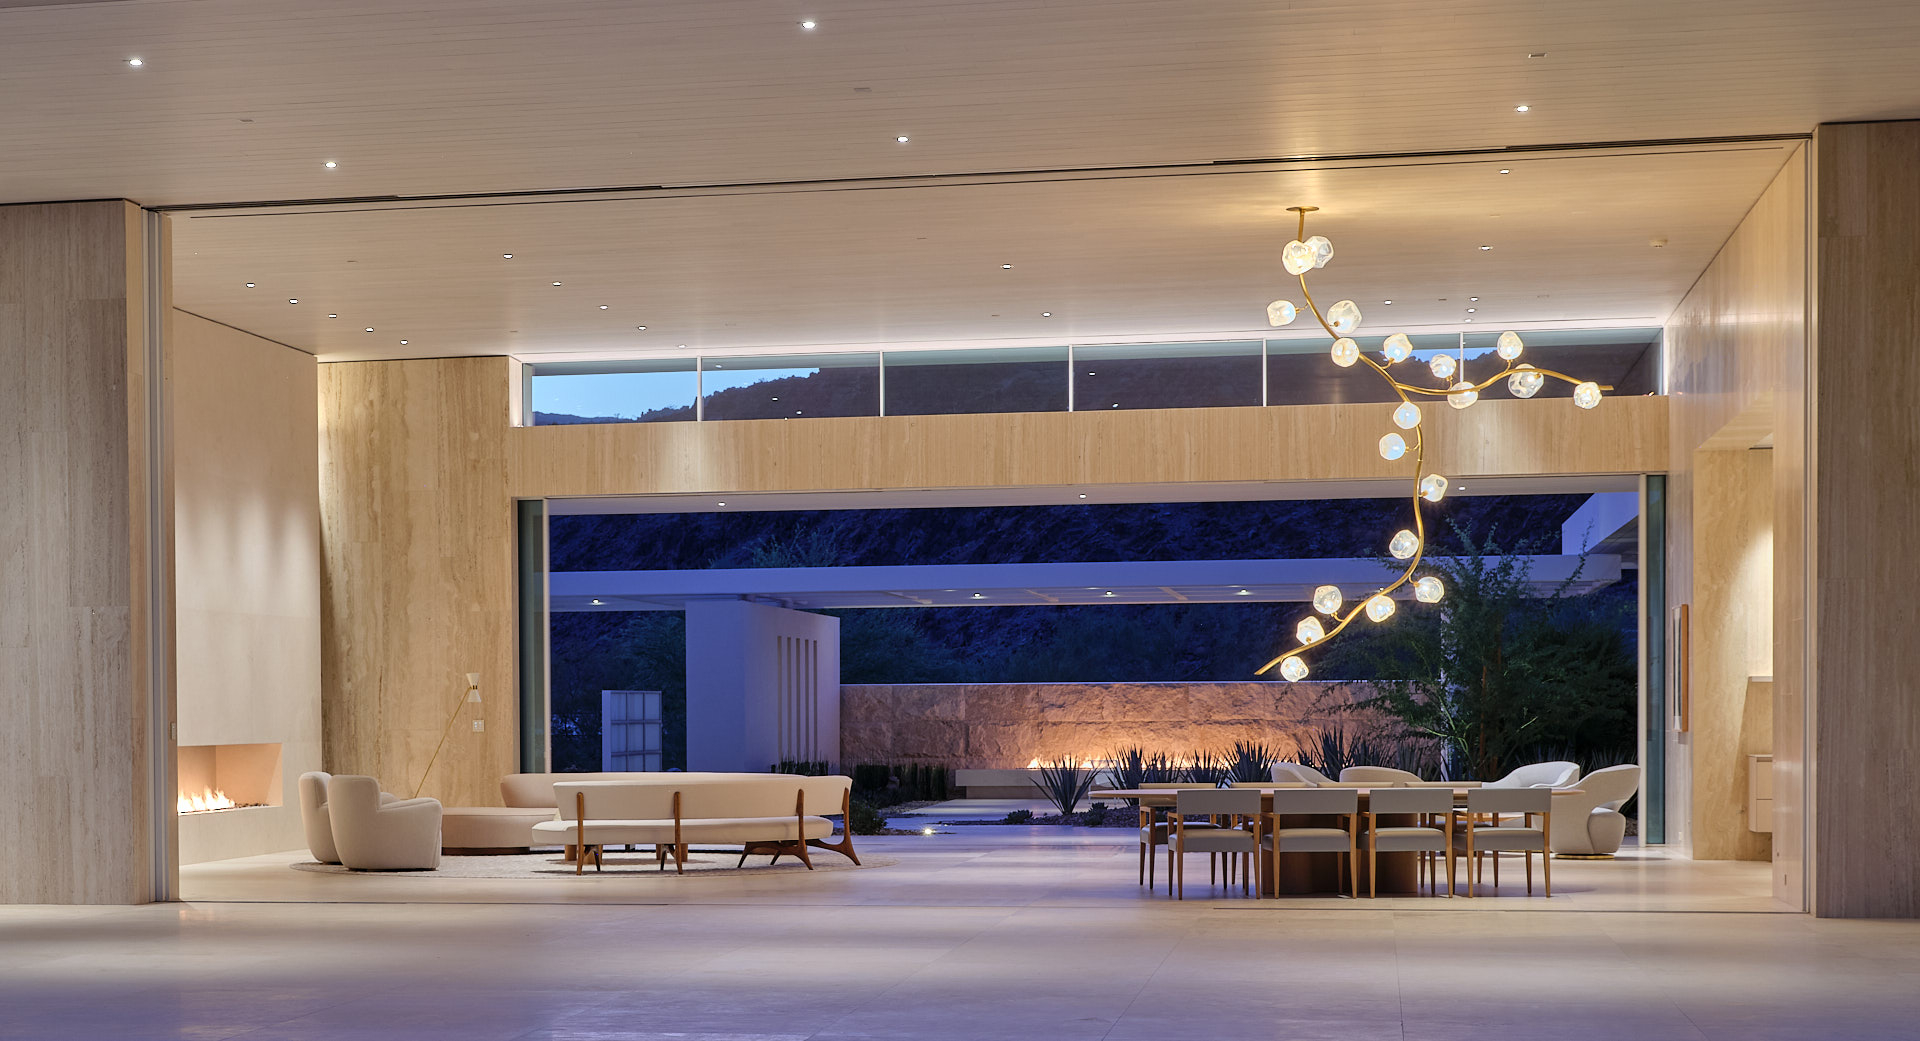 Kroeger Janev Architects, Nicole Hollis Interiors, Indian Wells, CA